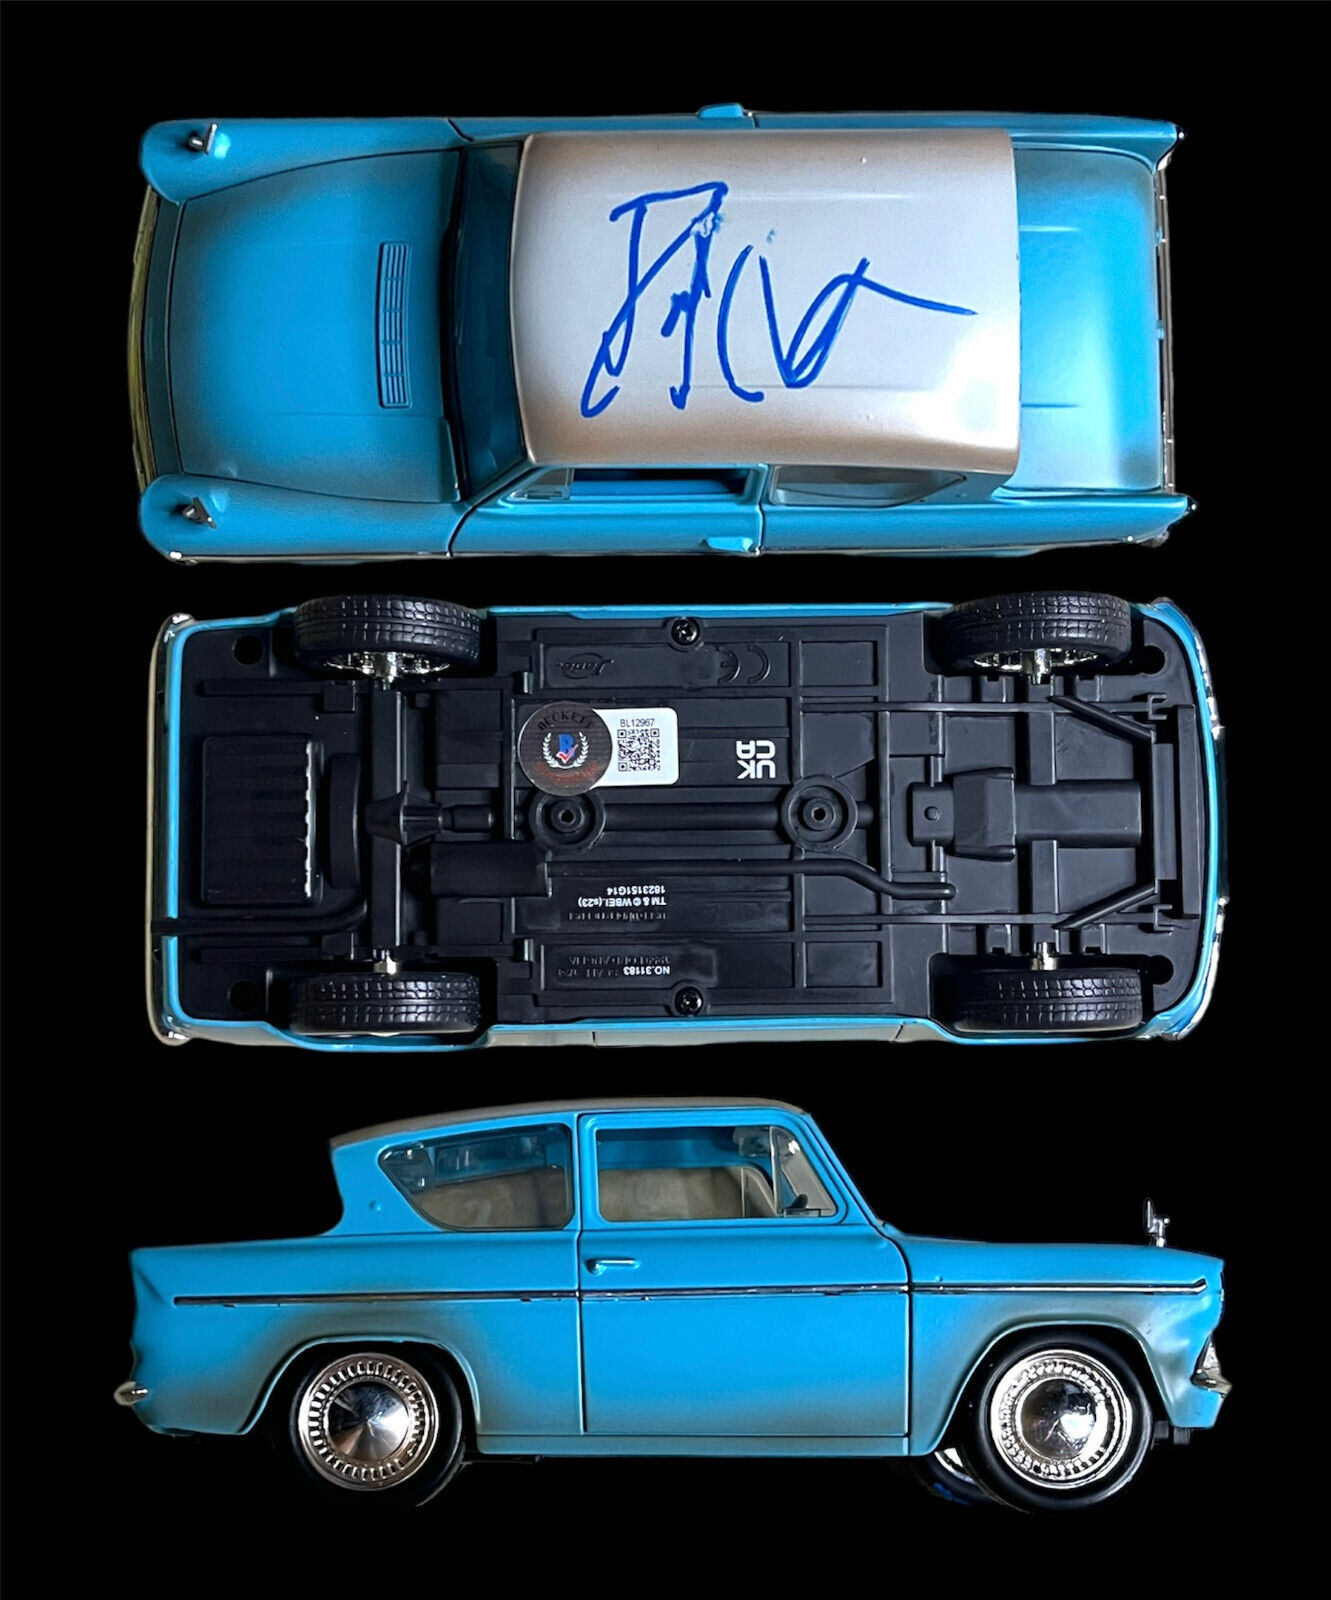 Daniel Radcliffe Signed Autograph Harry Potter 1959 Ford Anglia Diecast Car BAS